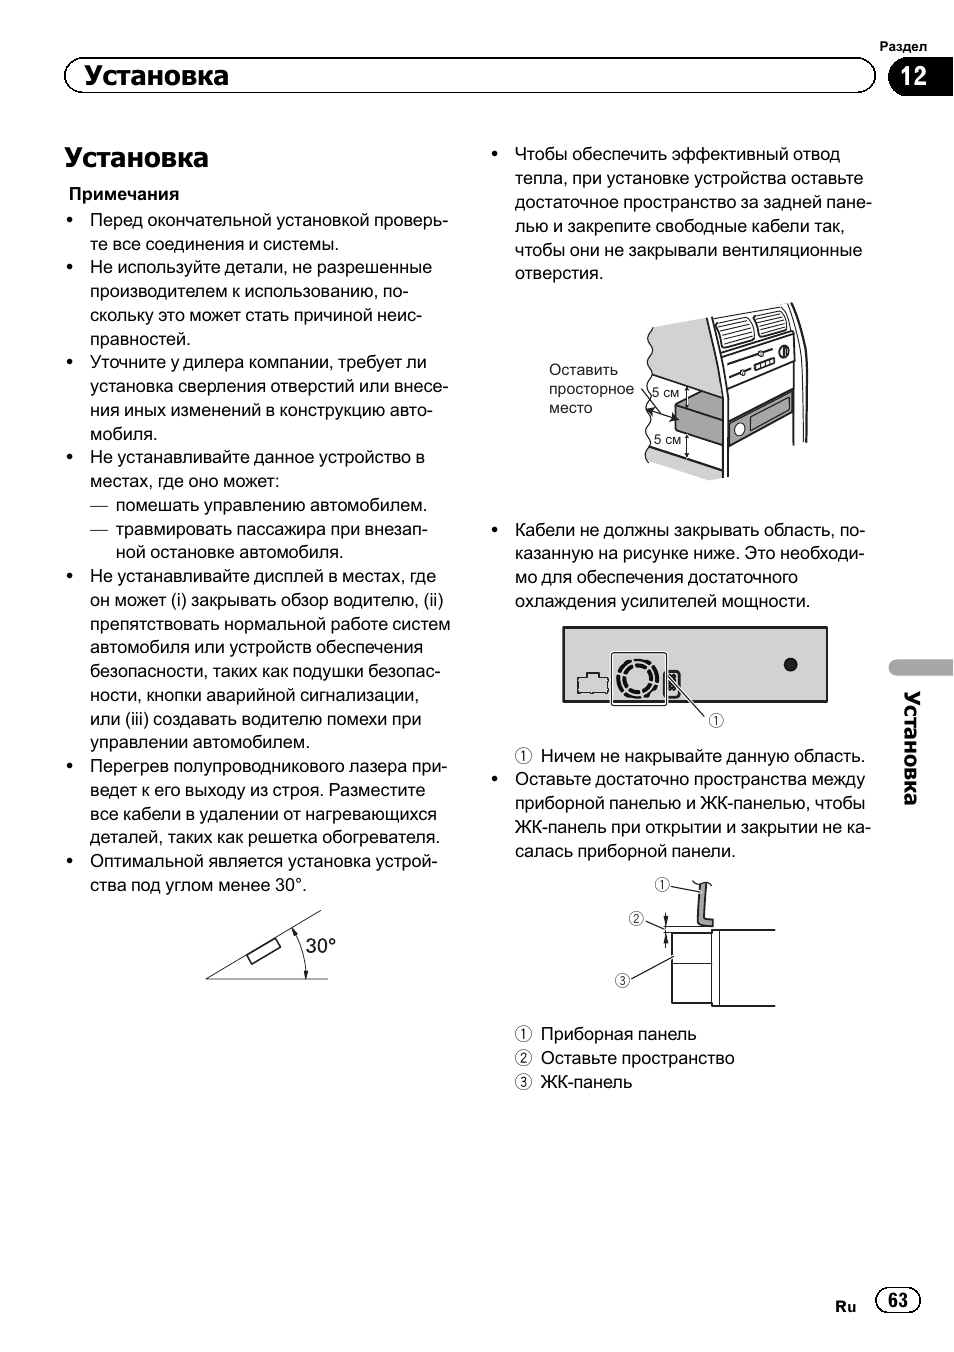 Магнитола пионер avh 2300dvd инструкция по эксплуатации